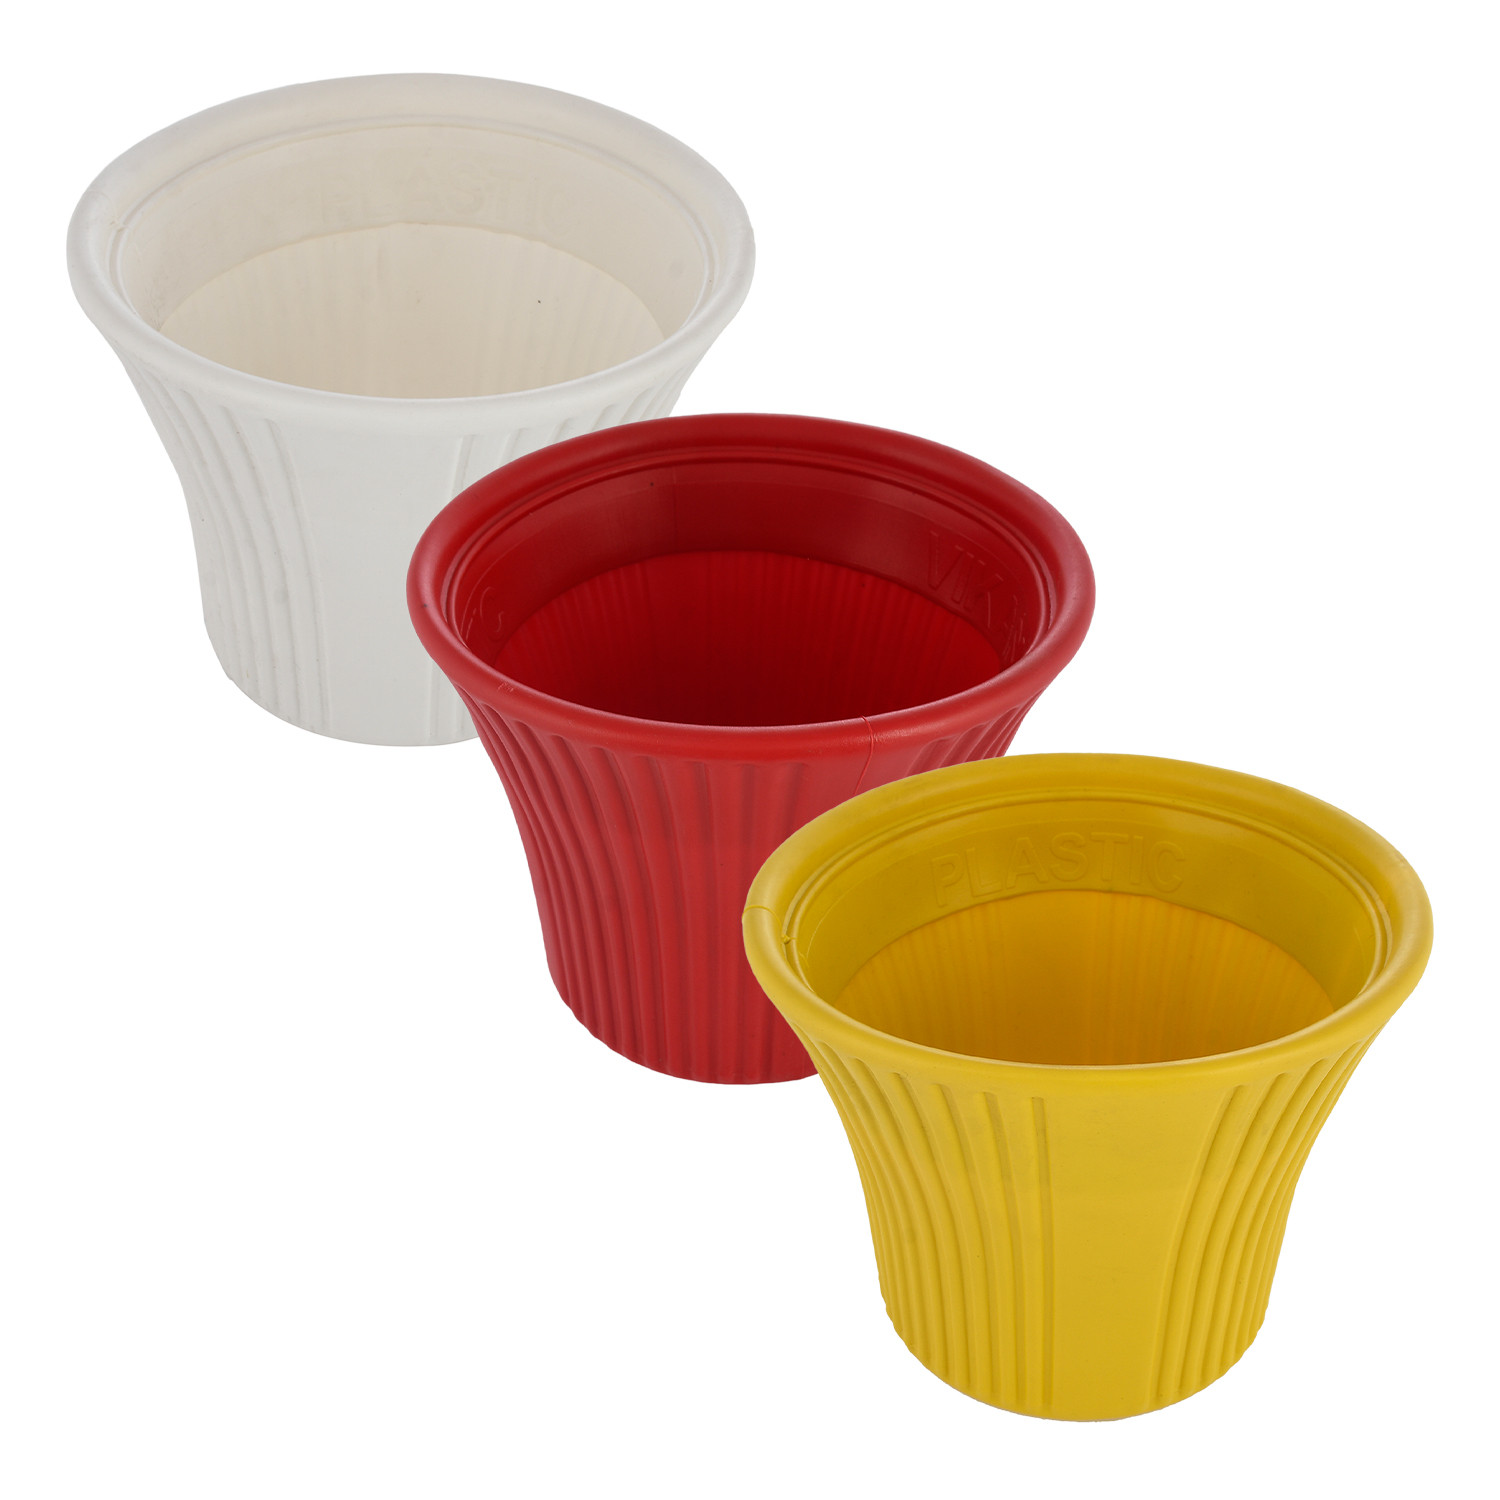 Kuber Industries Sunshine Flower Pot|Durable Plastic Flower Pots|Planters for Home Décor|Garden|Living Room|Balcony|8 Inch|Pack of 3 (Multicolor)